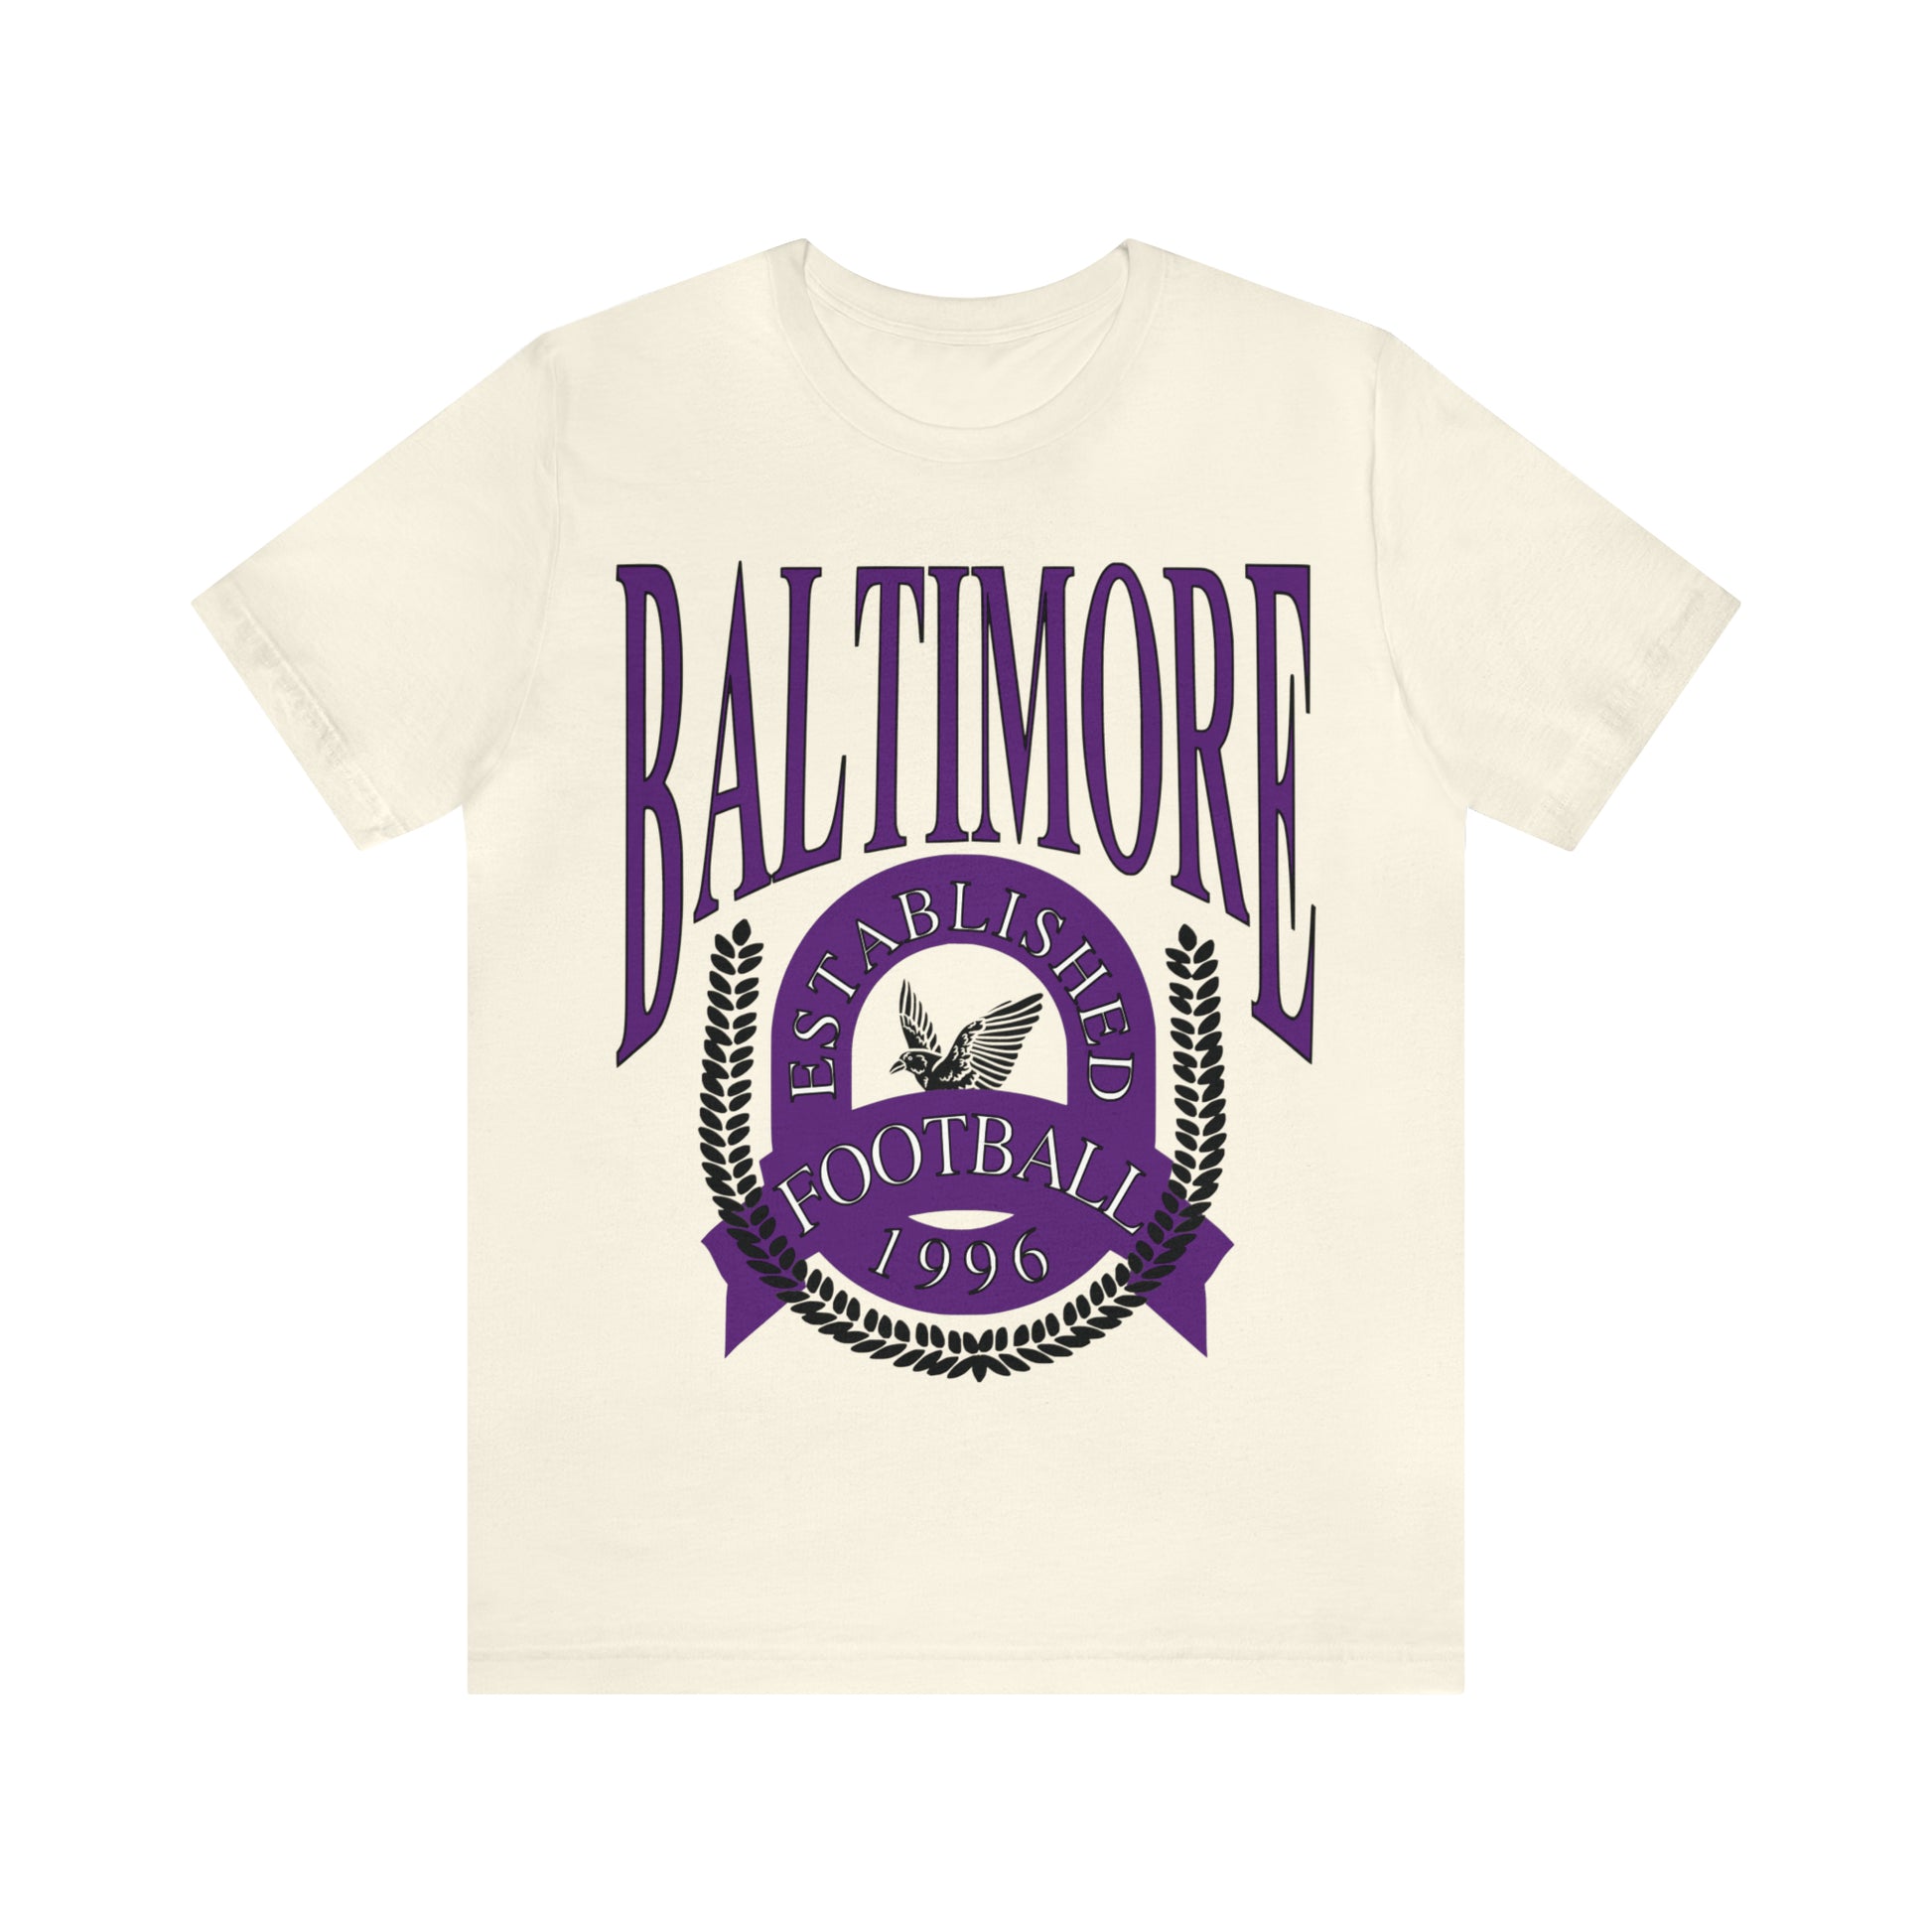 Baltimore Ravens T-Shirt Lamar Jackson, OBJ, Odell Beckham Jr, Men's, Women's, Lamar Jackson, Vintage, Retro, Short Sleeve, The Dallas Family, Etsy, The Dallas Family, Oversized, Cute, Affordable, Retro, Cheap, Soft, Ivory, tan, beige